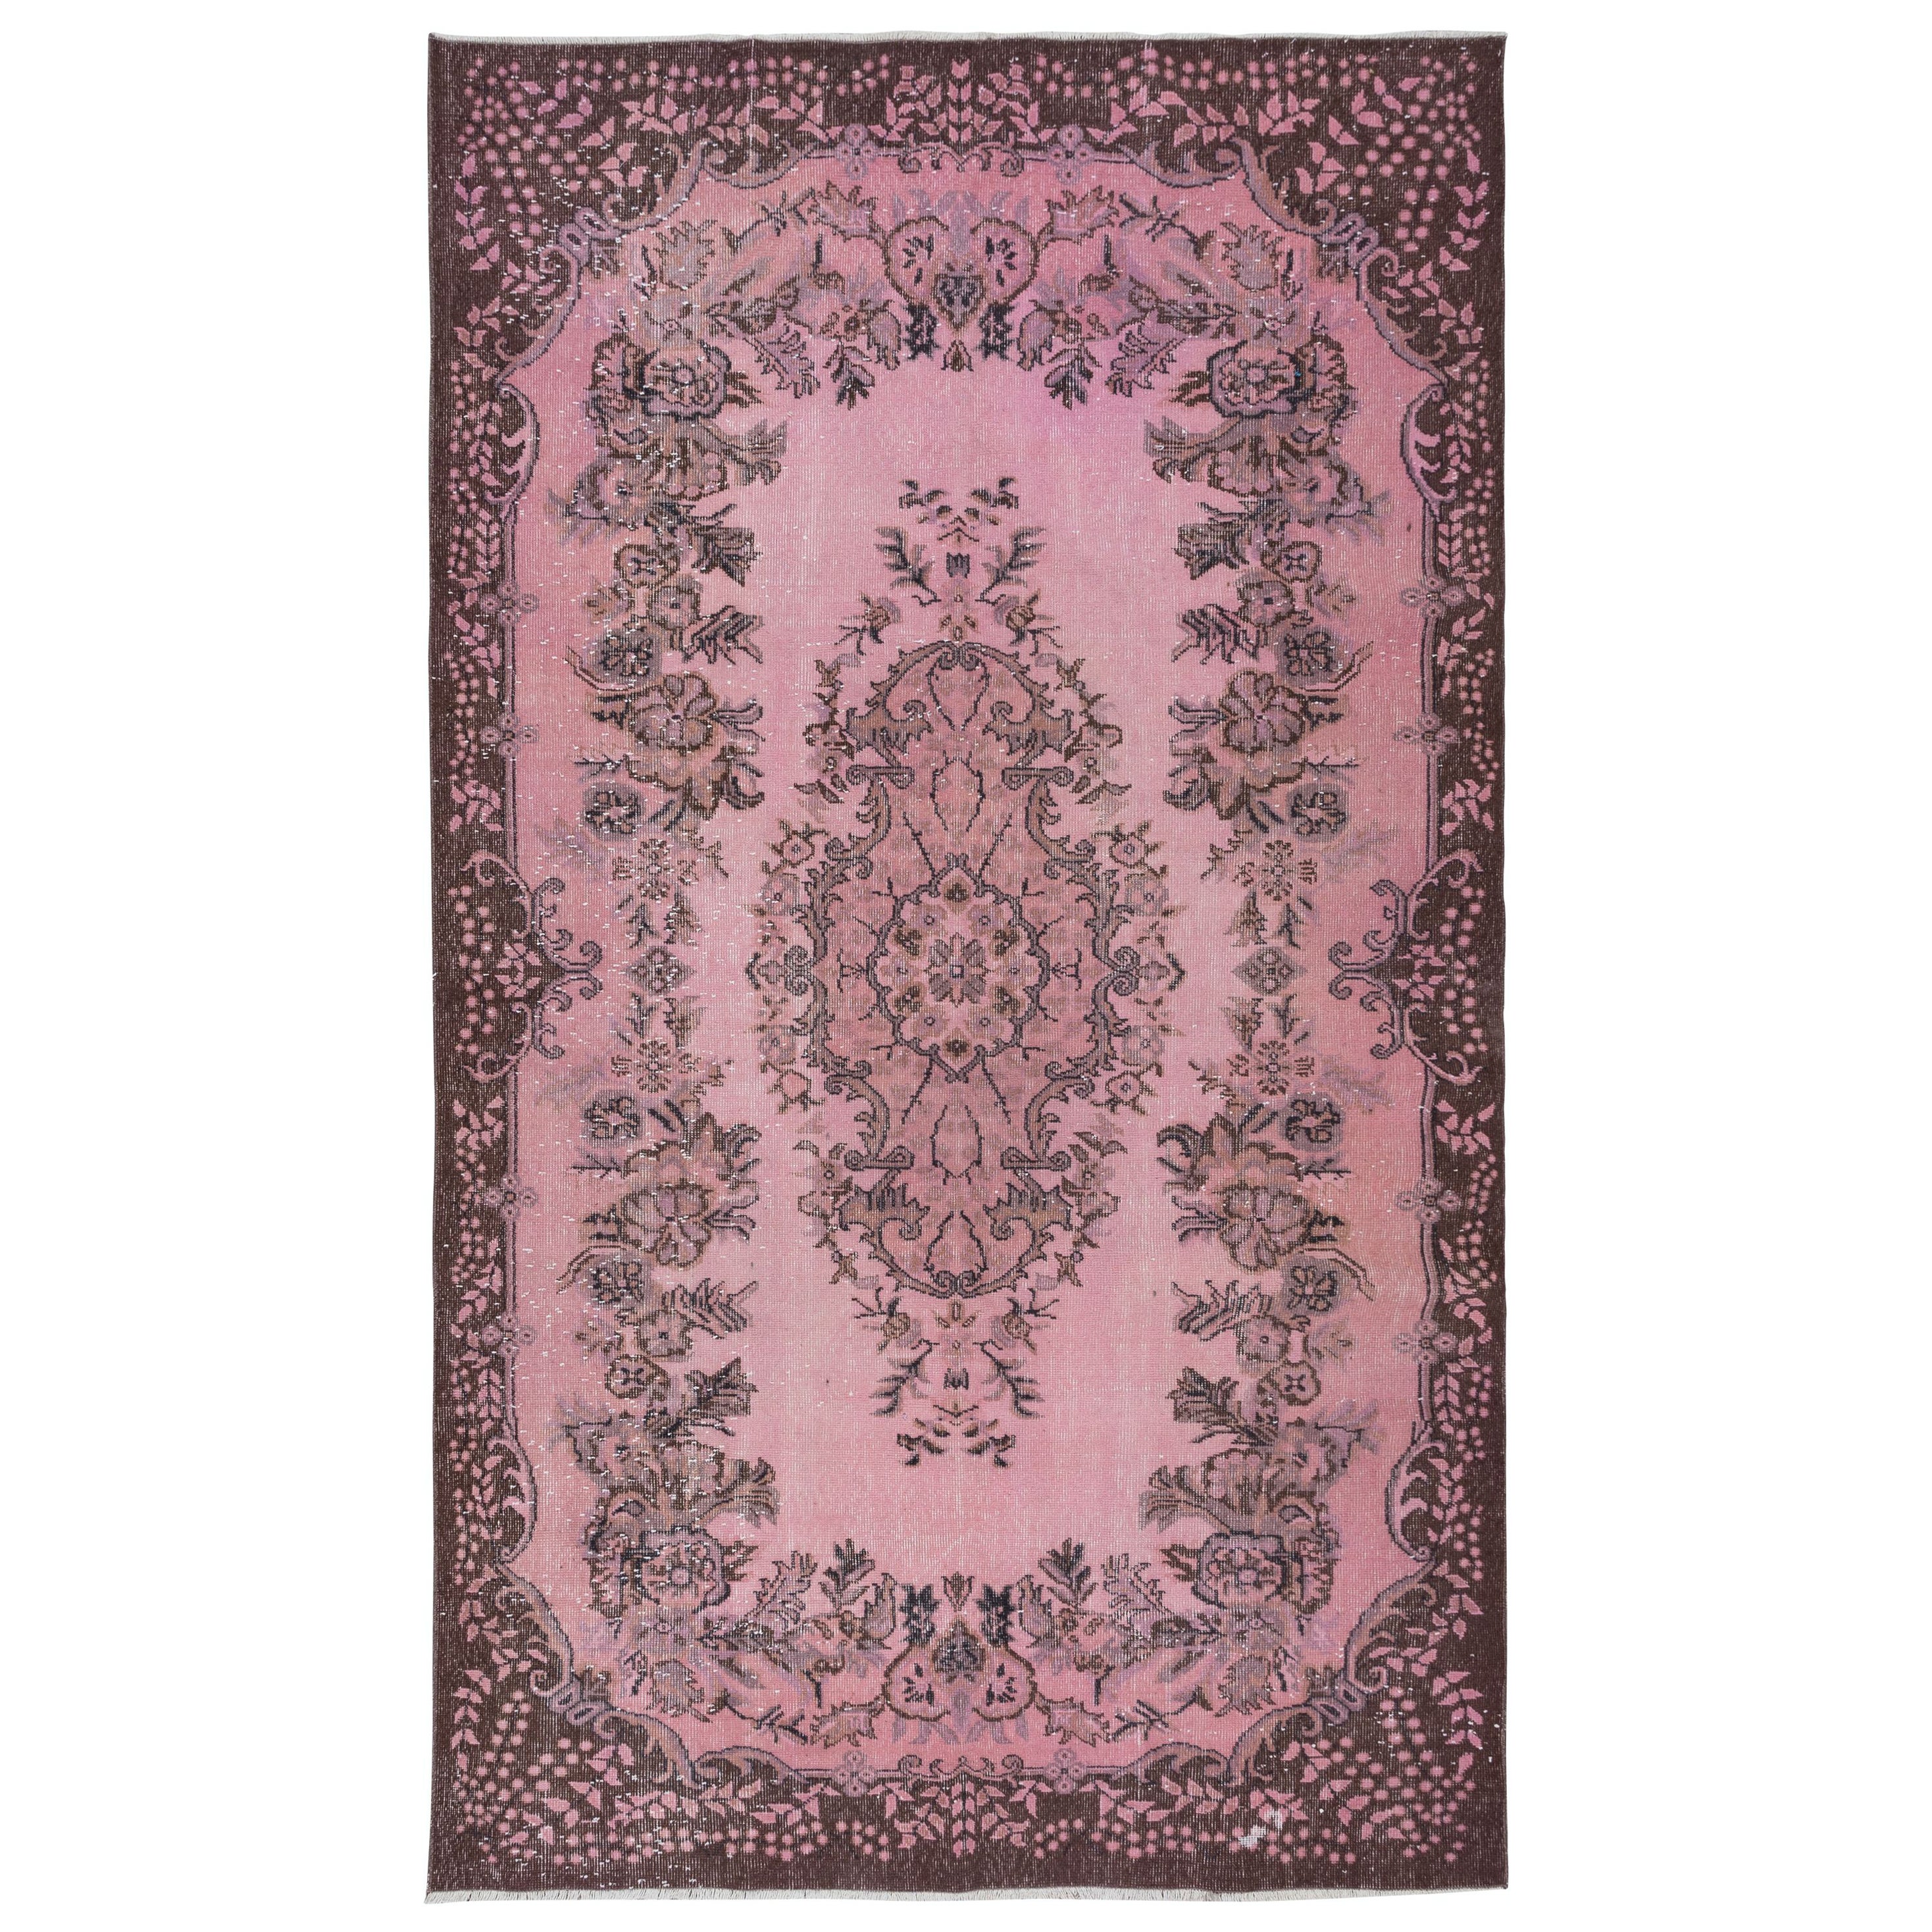 6x9.8 Ft Pink Area Rug for Modern Interiors, Handmade Turkish Carpet